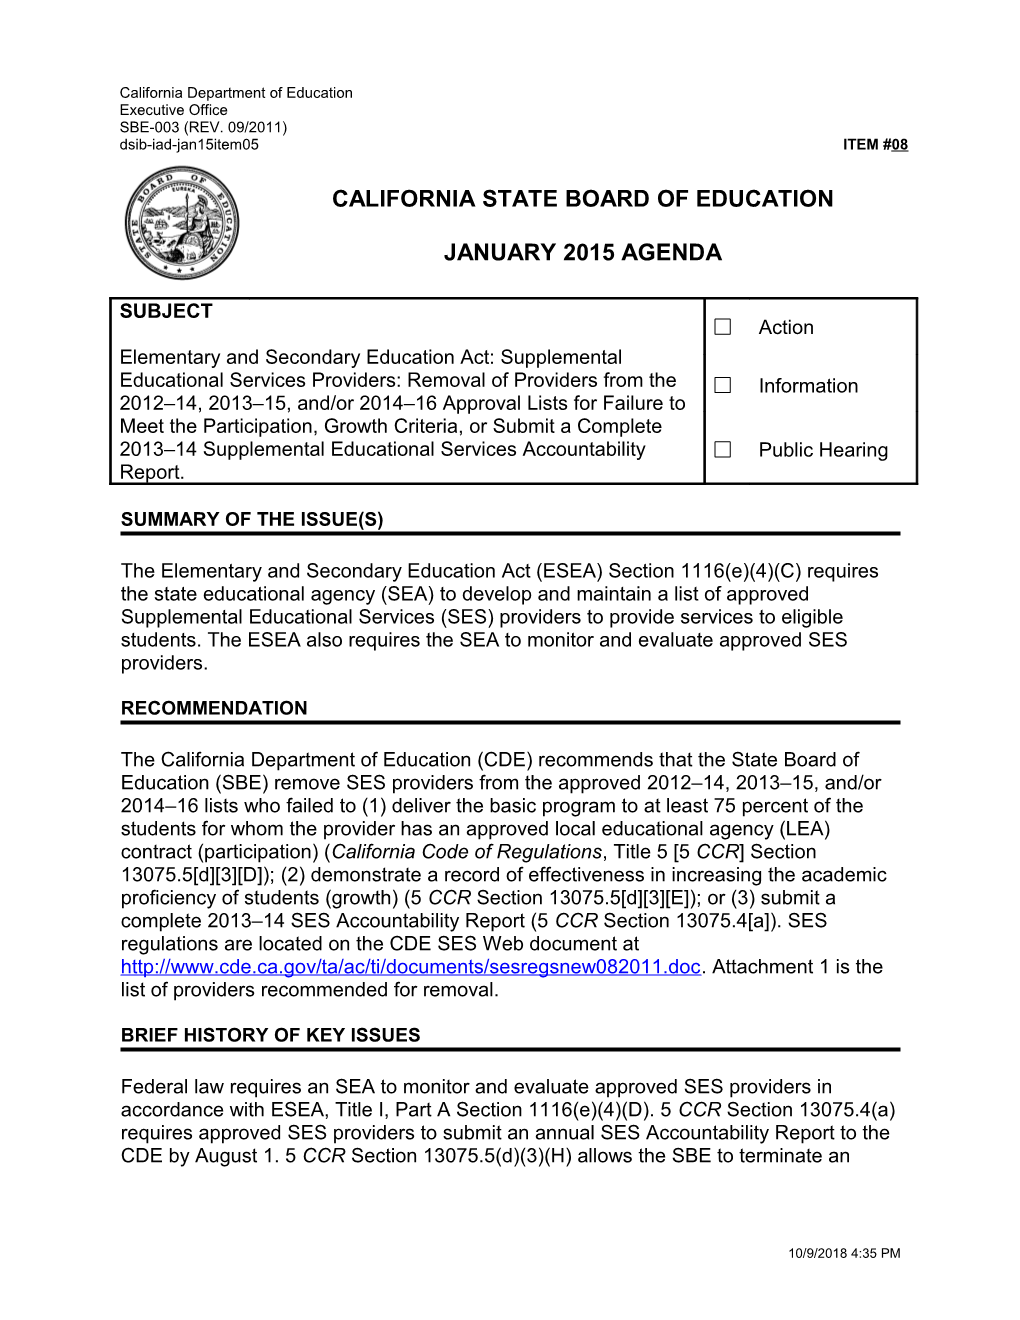 January 2015 Agenda Item 08 - Meeting Agendas (CA State Board of Education)